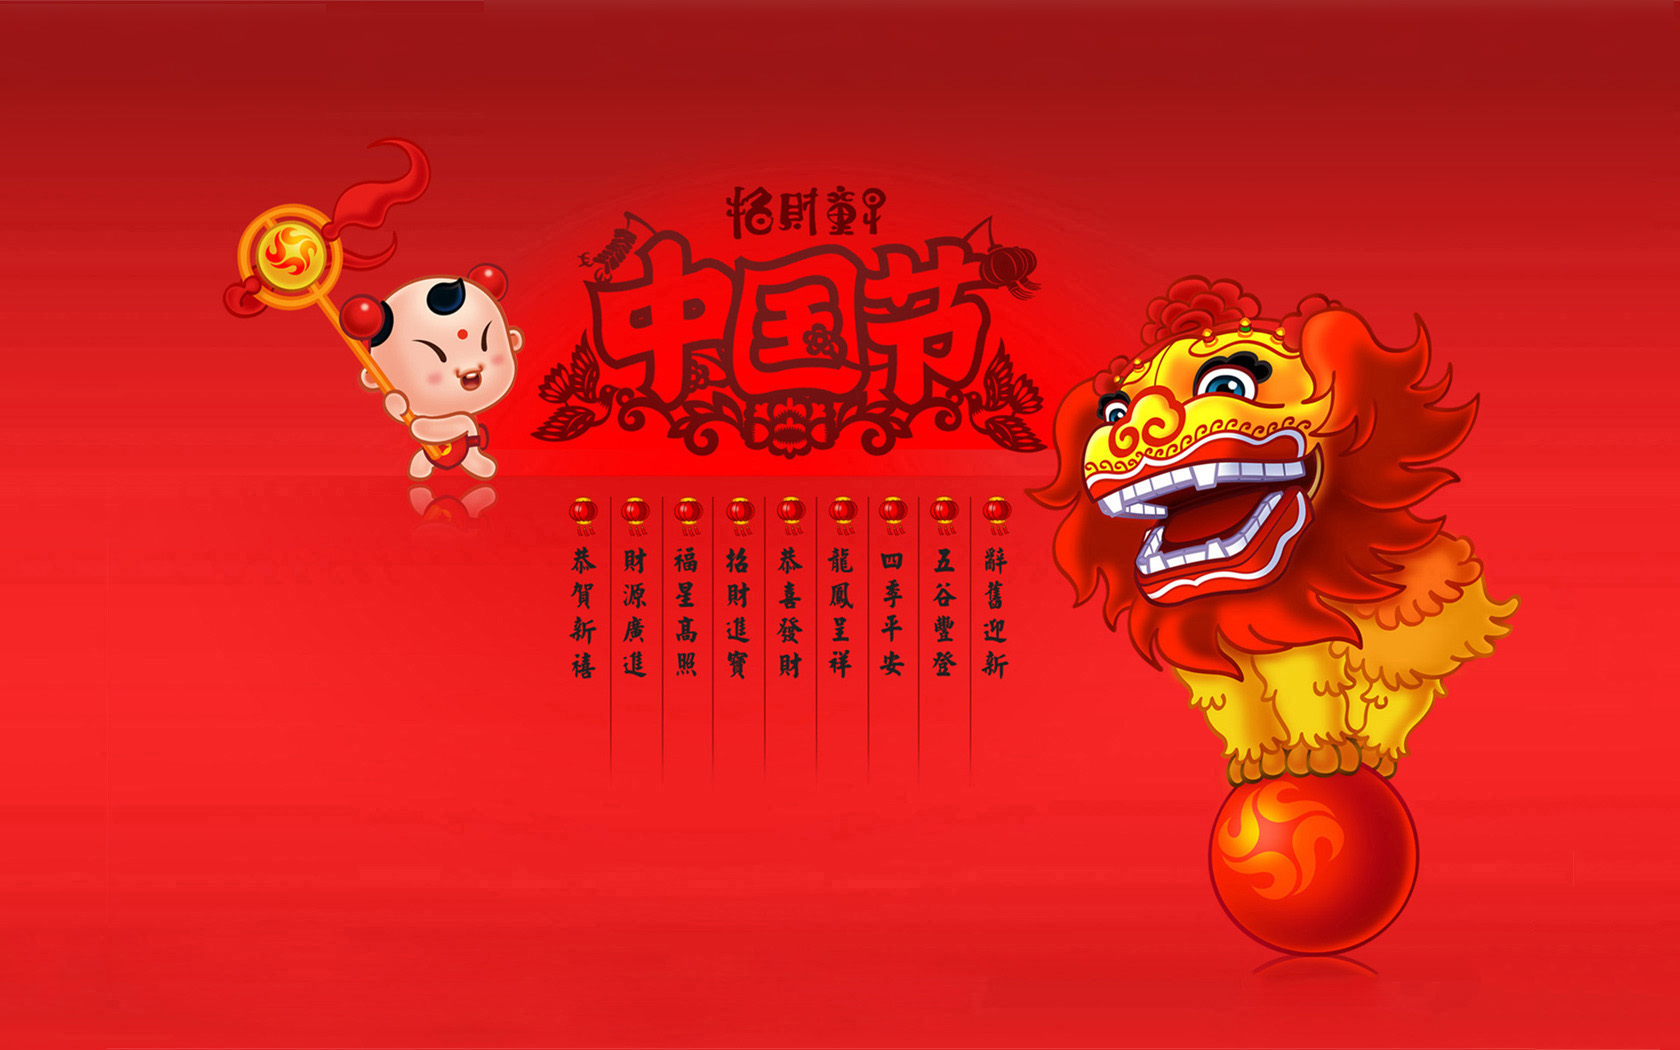 New Year, Spring Festival cute lion dance desktop wallpaper